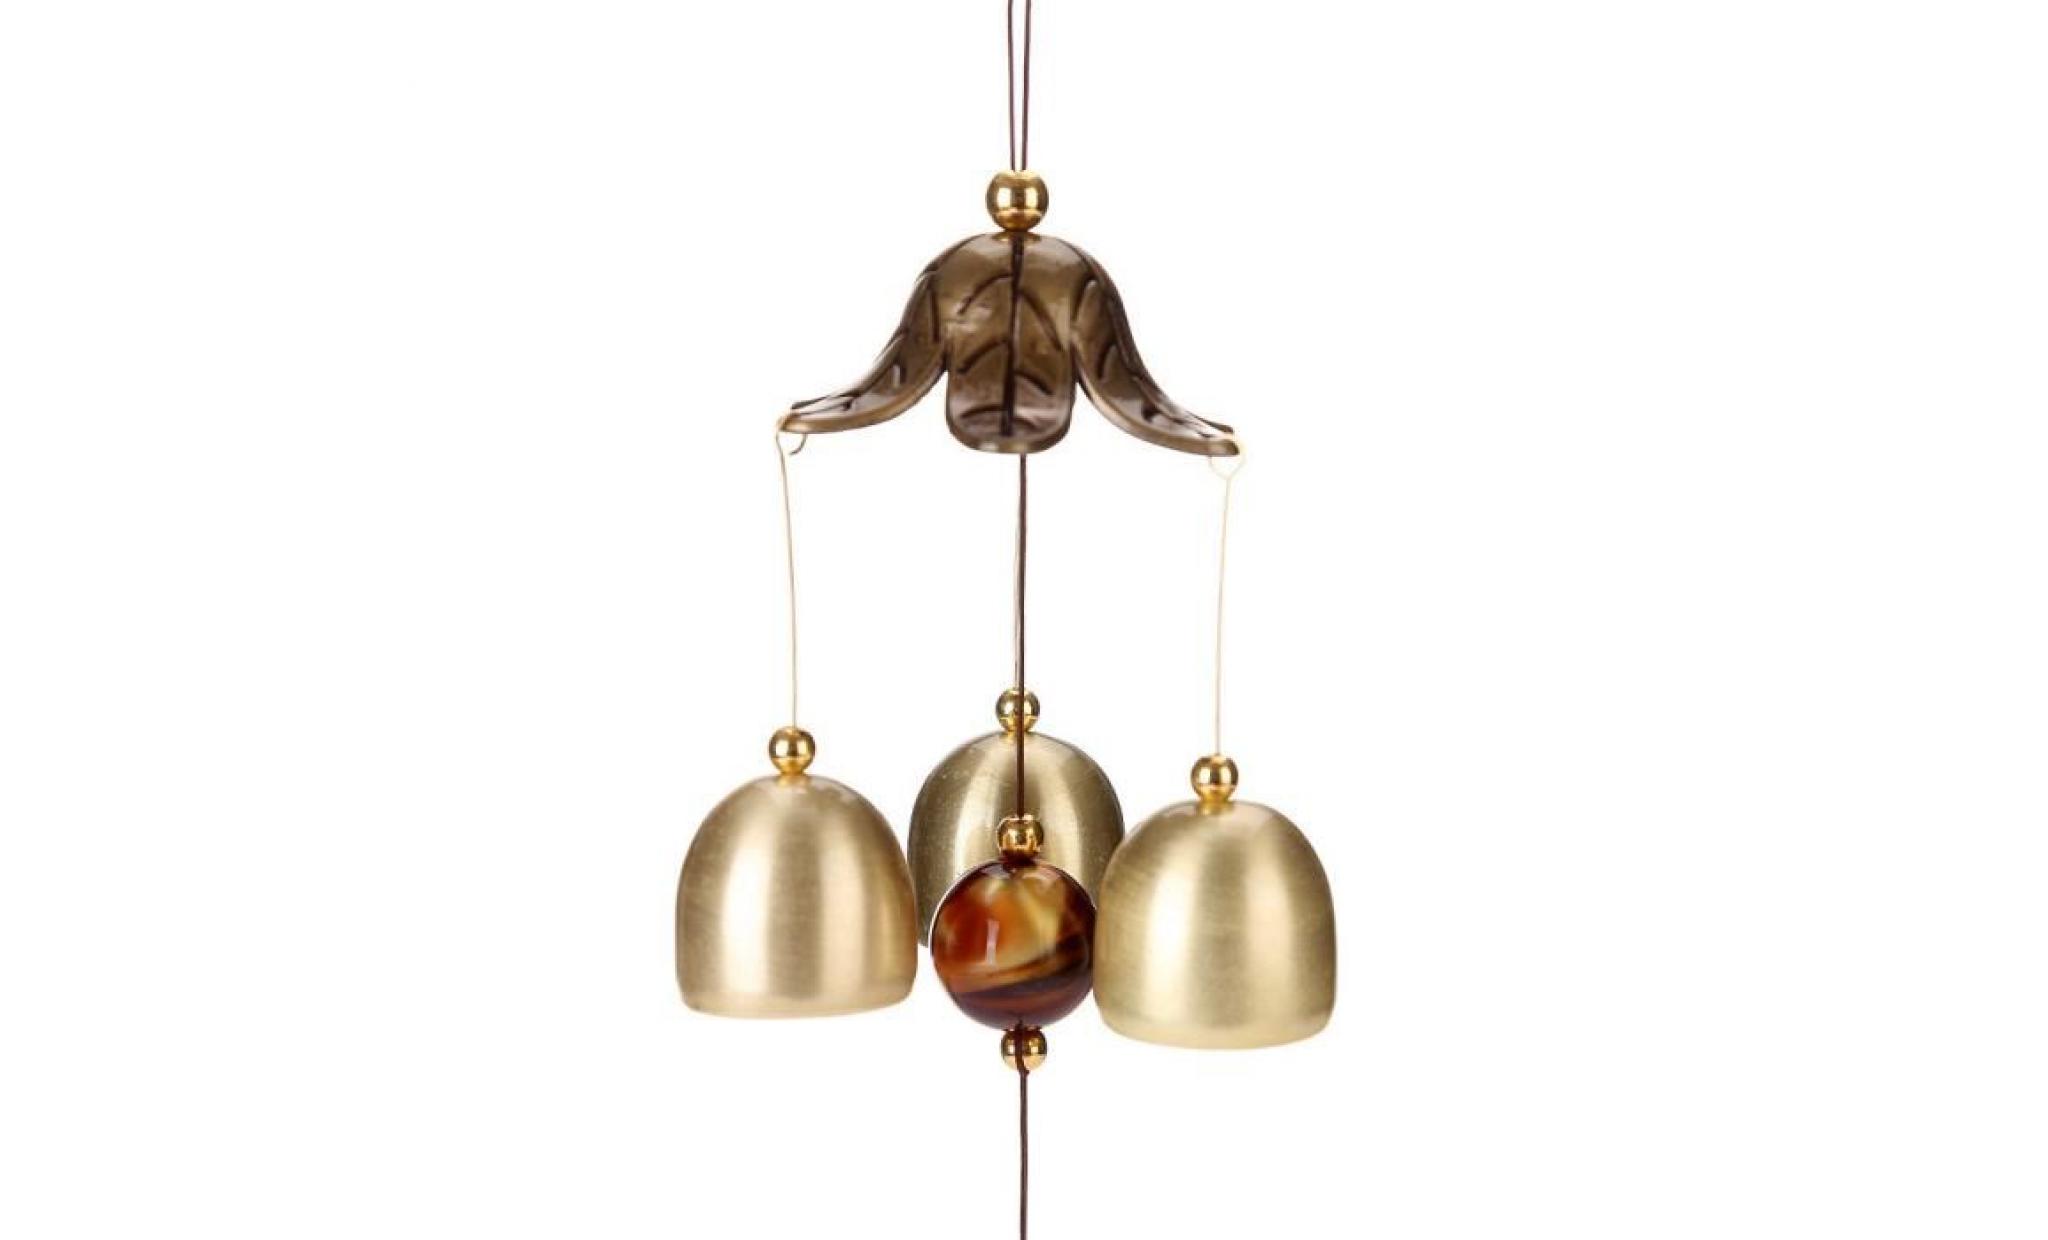 incroyable chime grace collection grand son bronze couleur cloche carillons éoliens _efr * 180 pas cher